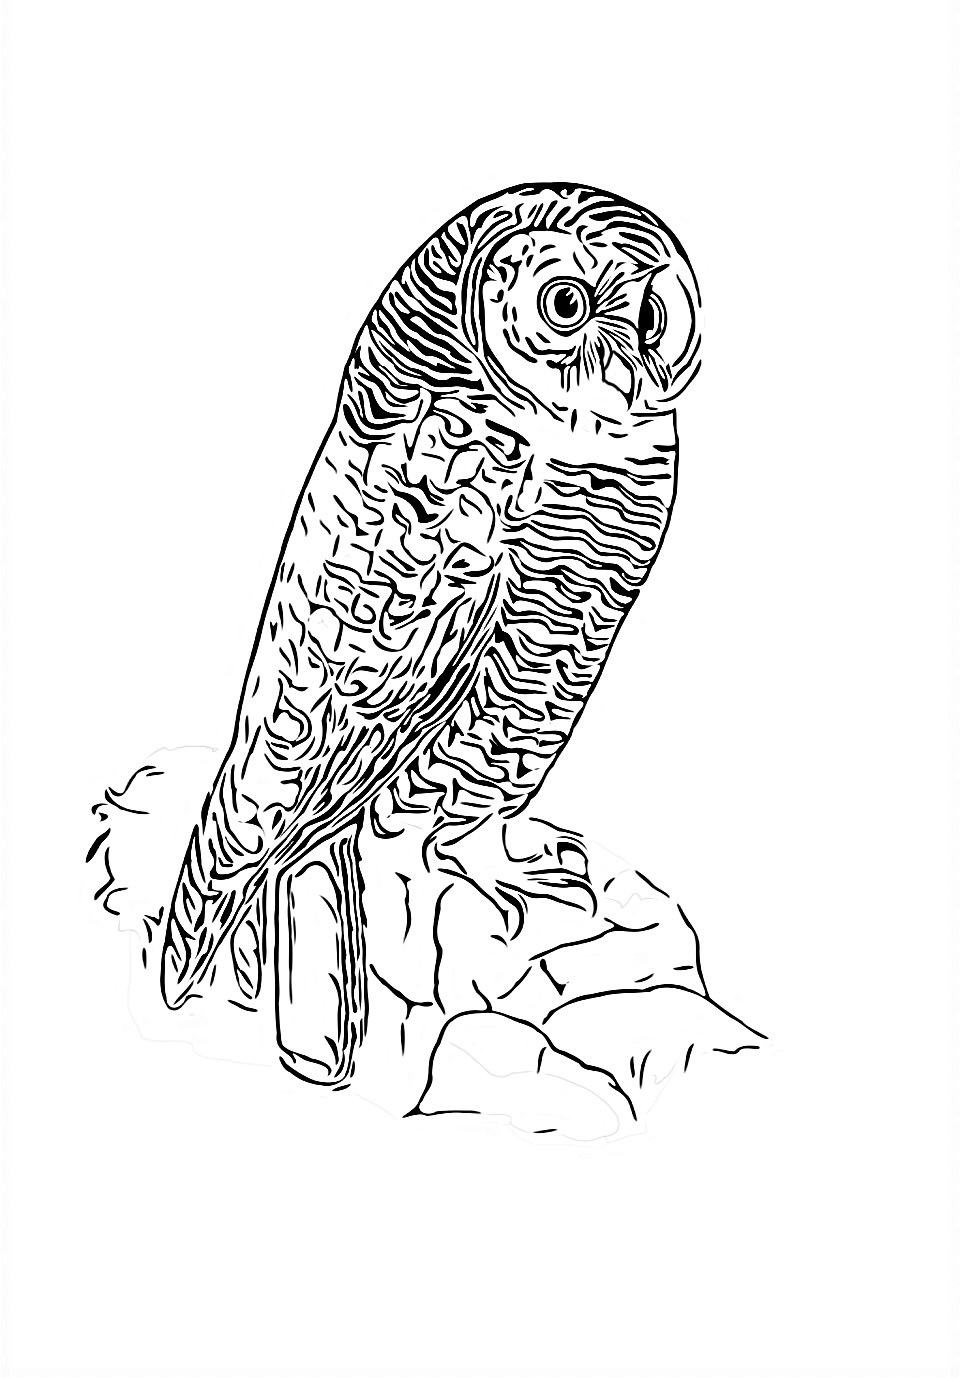 Owl on the Rocks